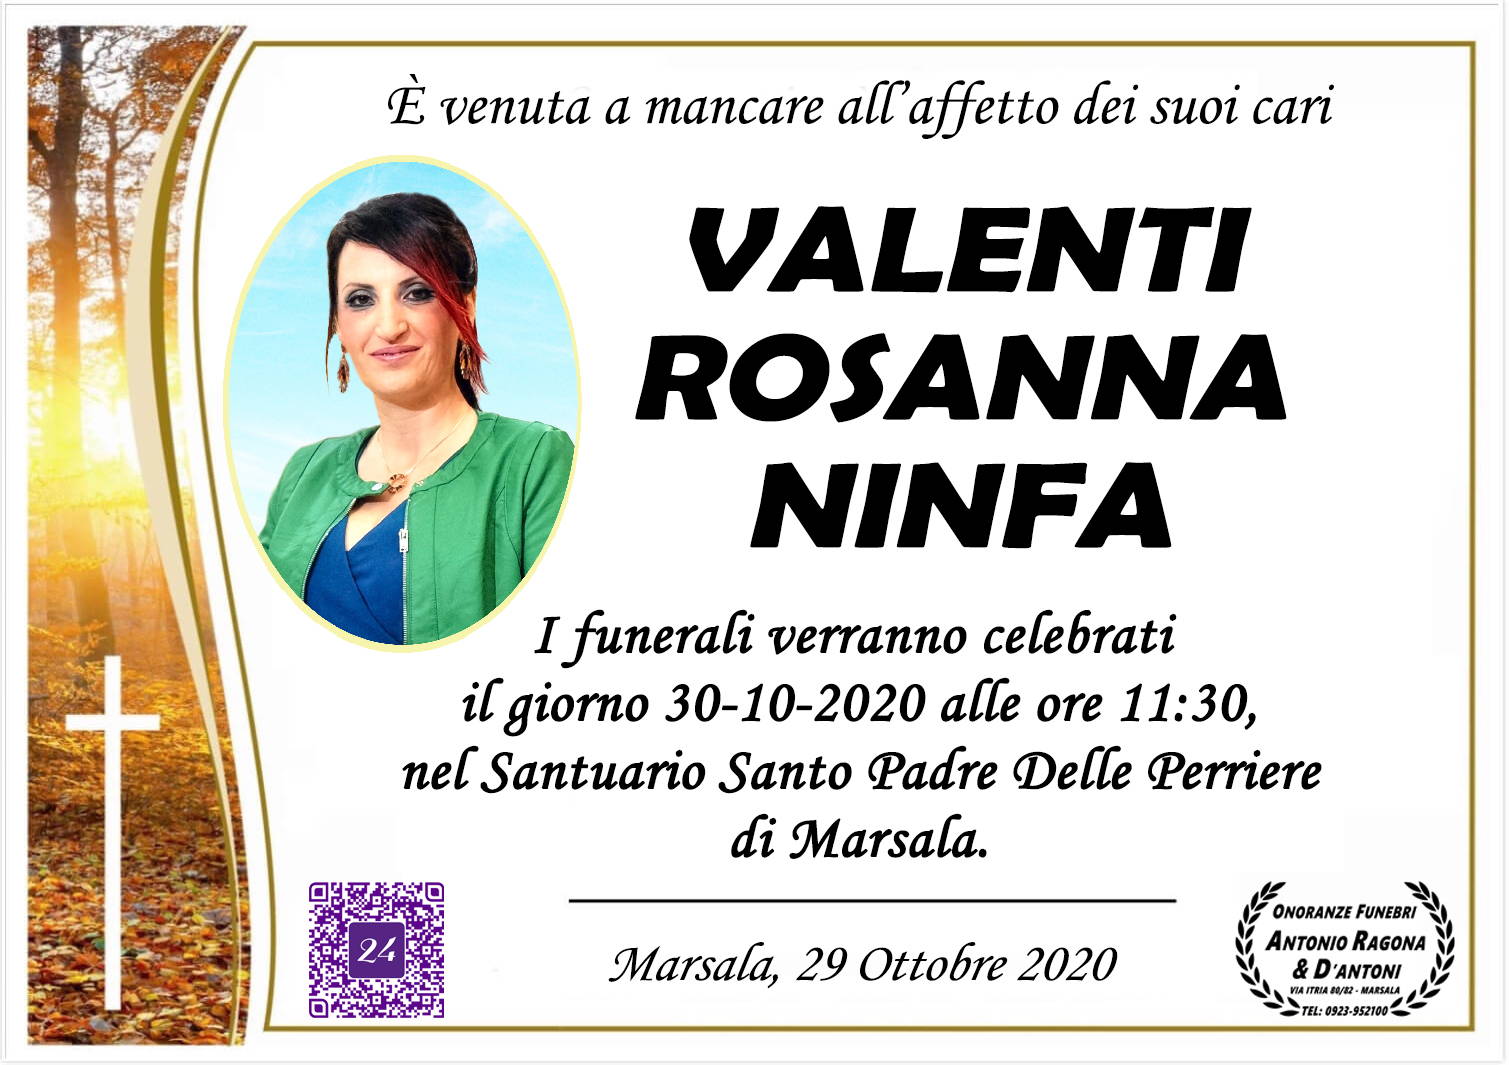 Rosanna Ninfa Valenti